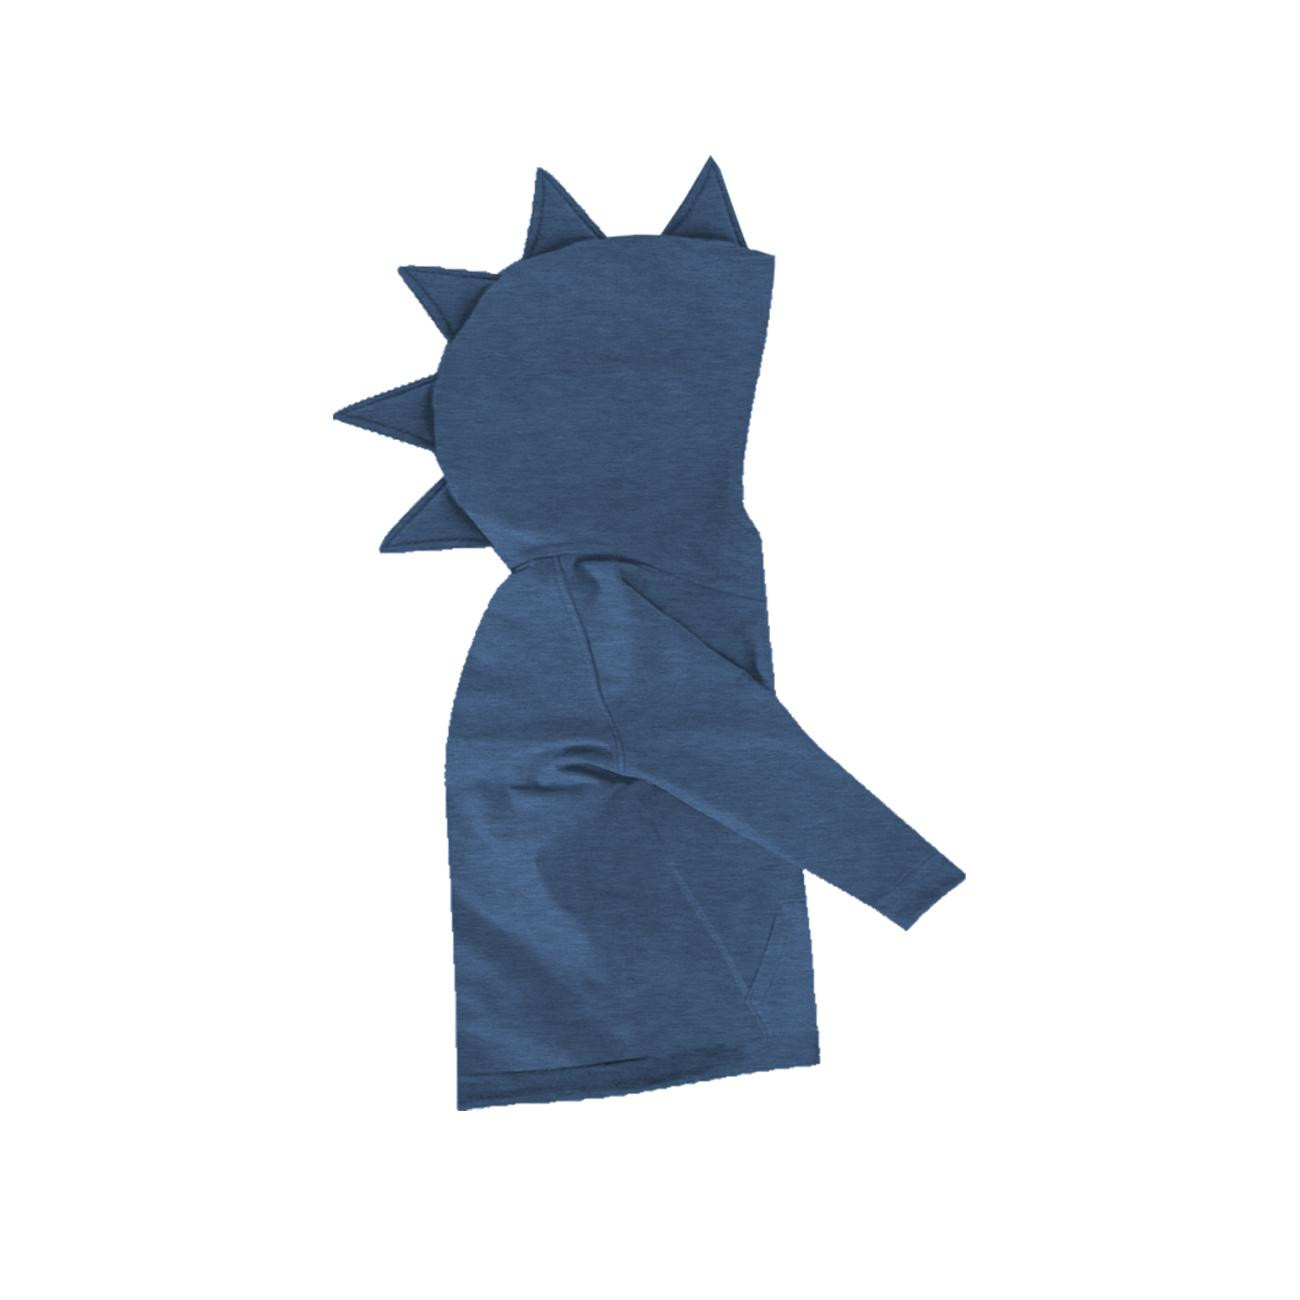 KID'S HOODIE DINO (PARIS) - MELANGE POWDER BLUE - sewing set